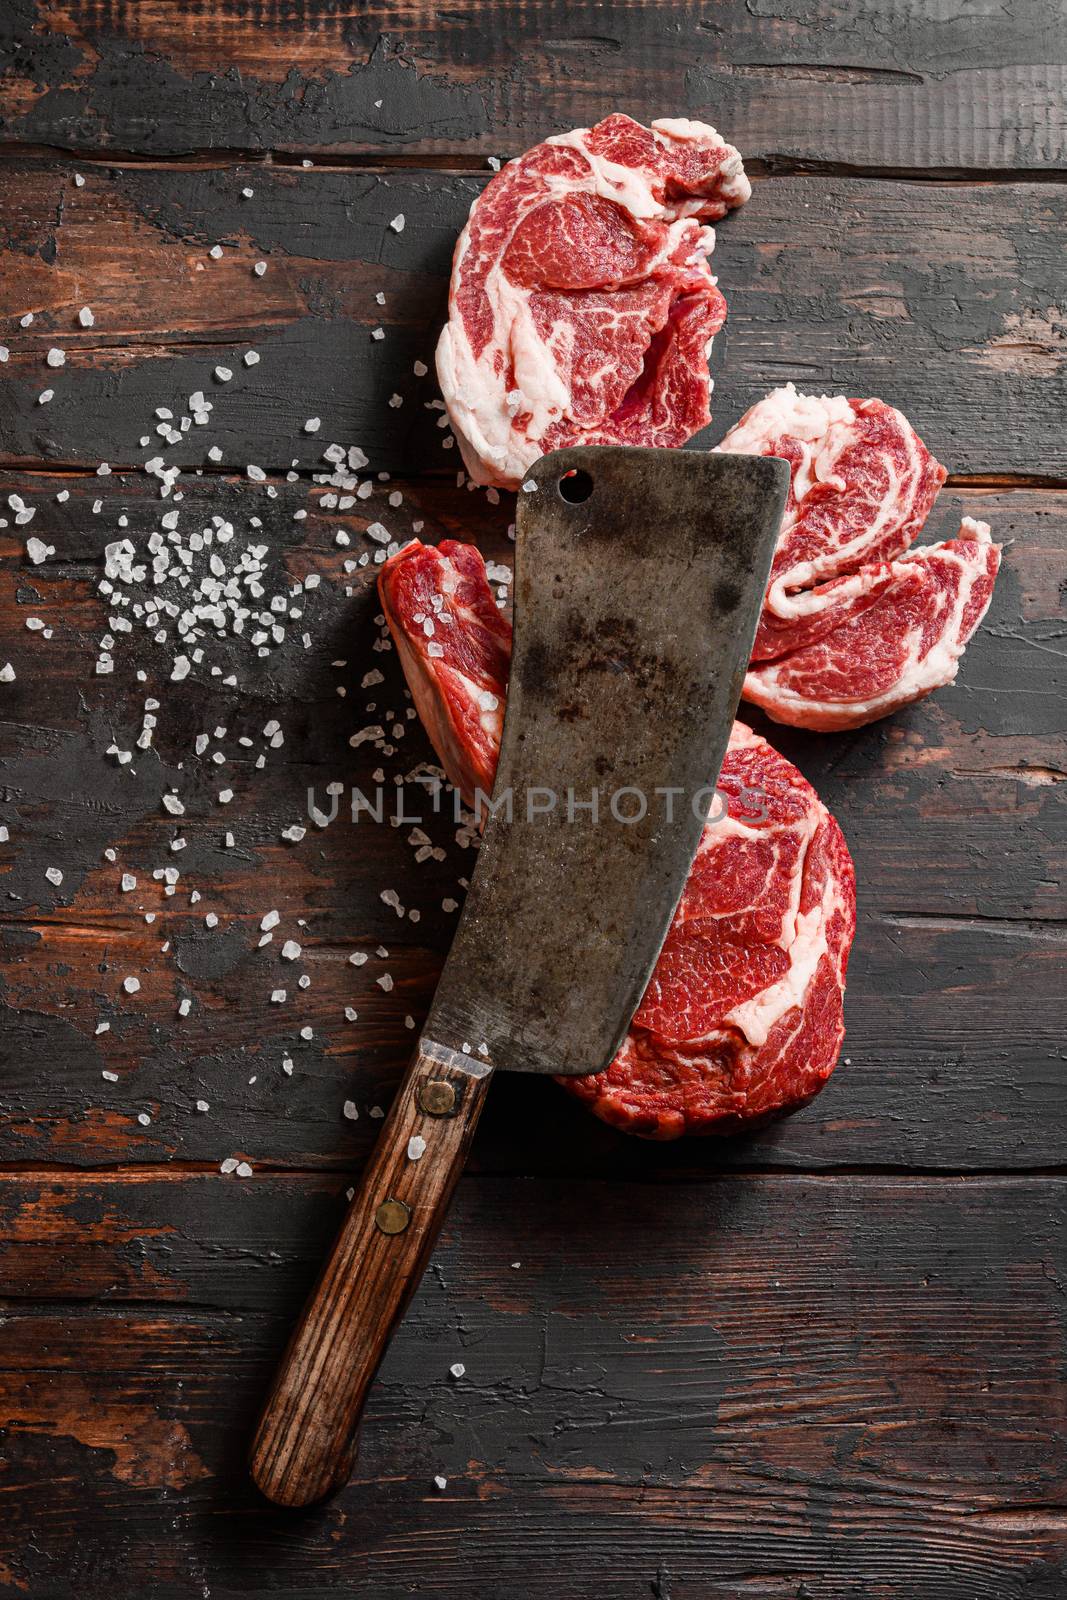 raw cowboy steak and Chuck eye roll with seasonings on old butchery wood background, prime rib.